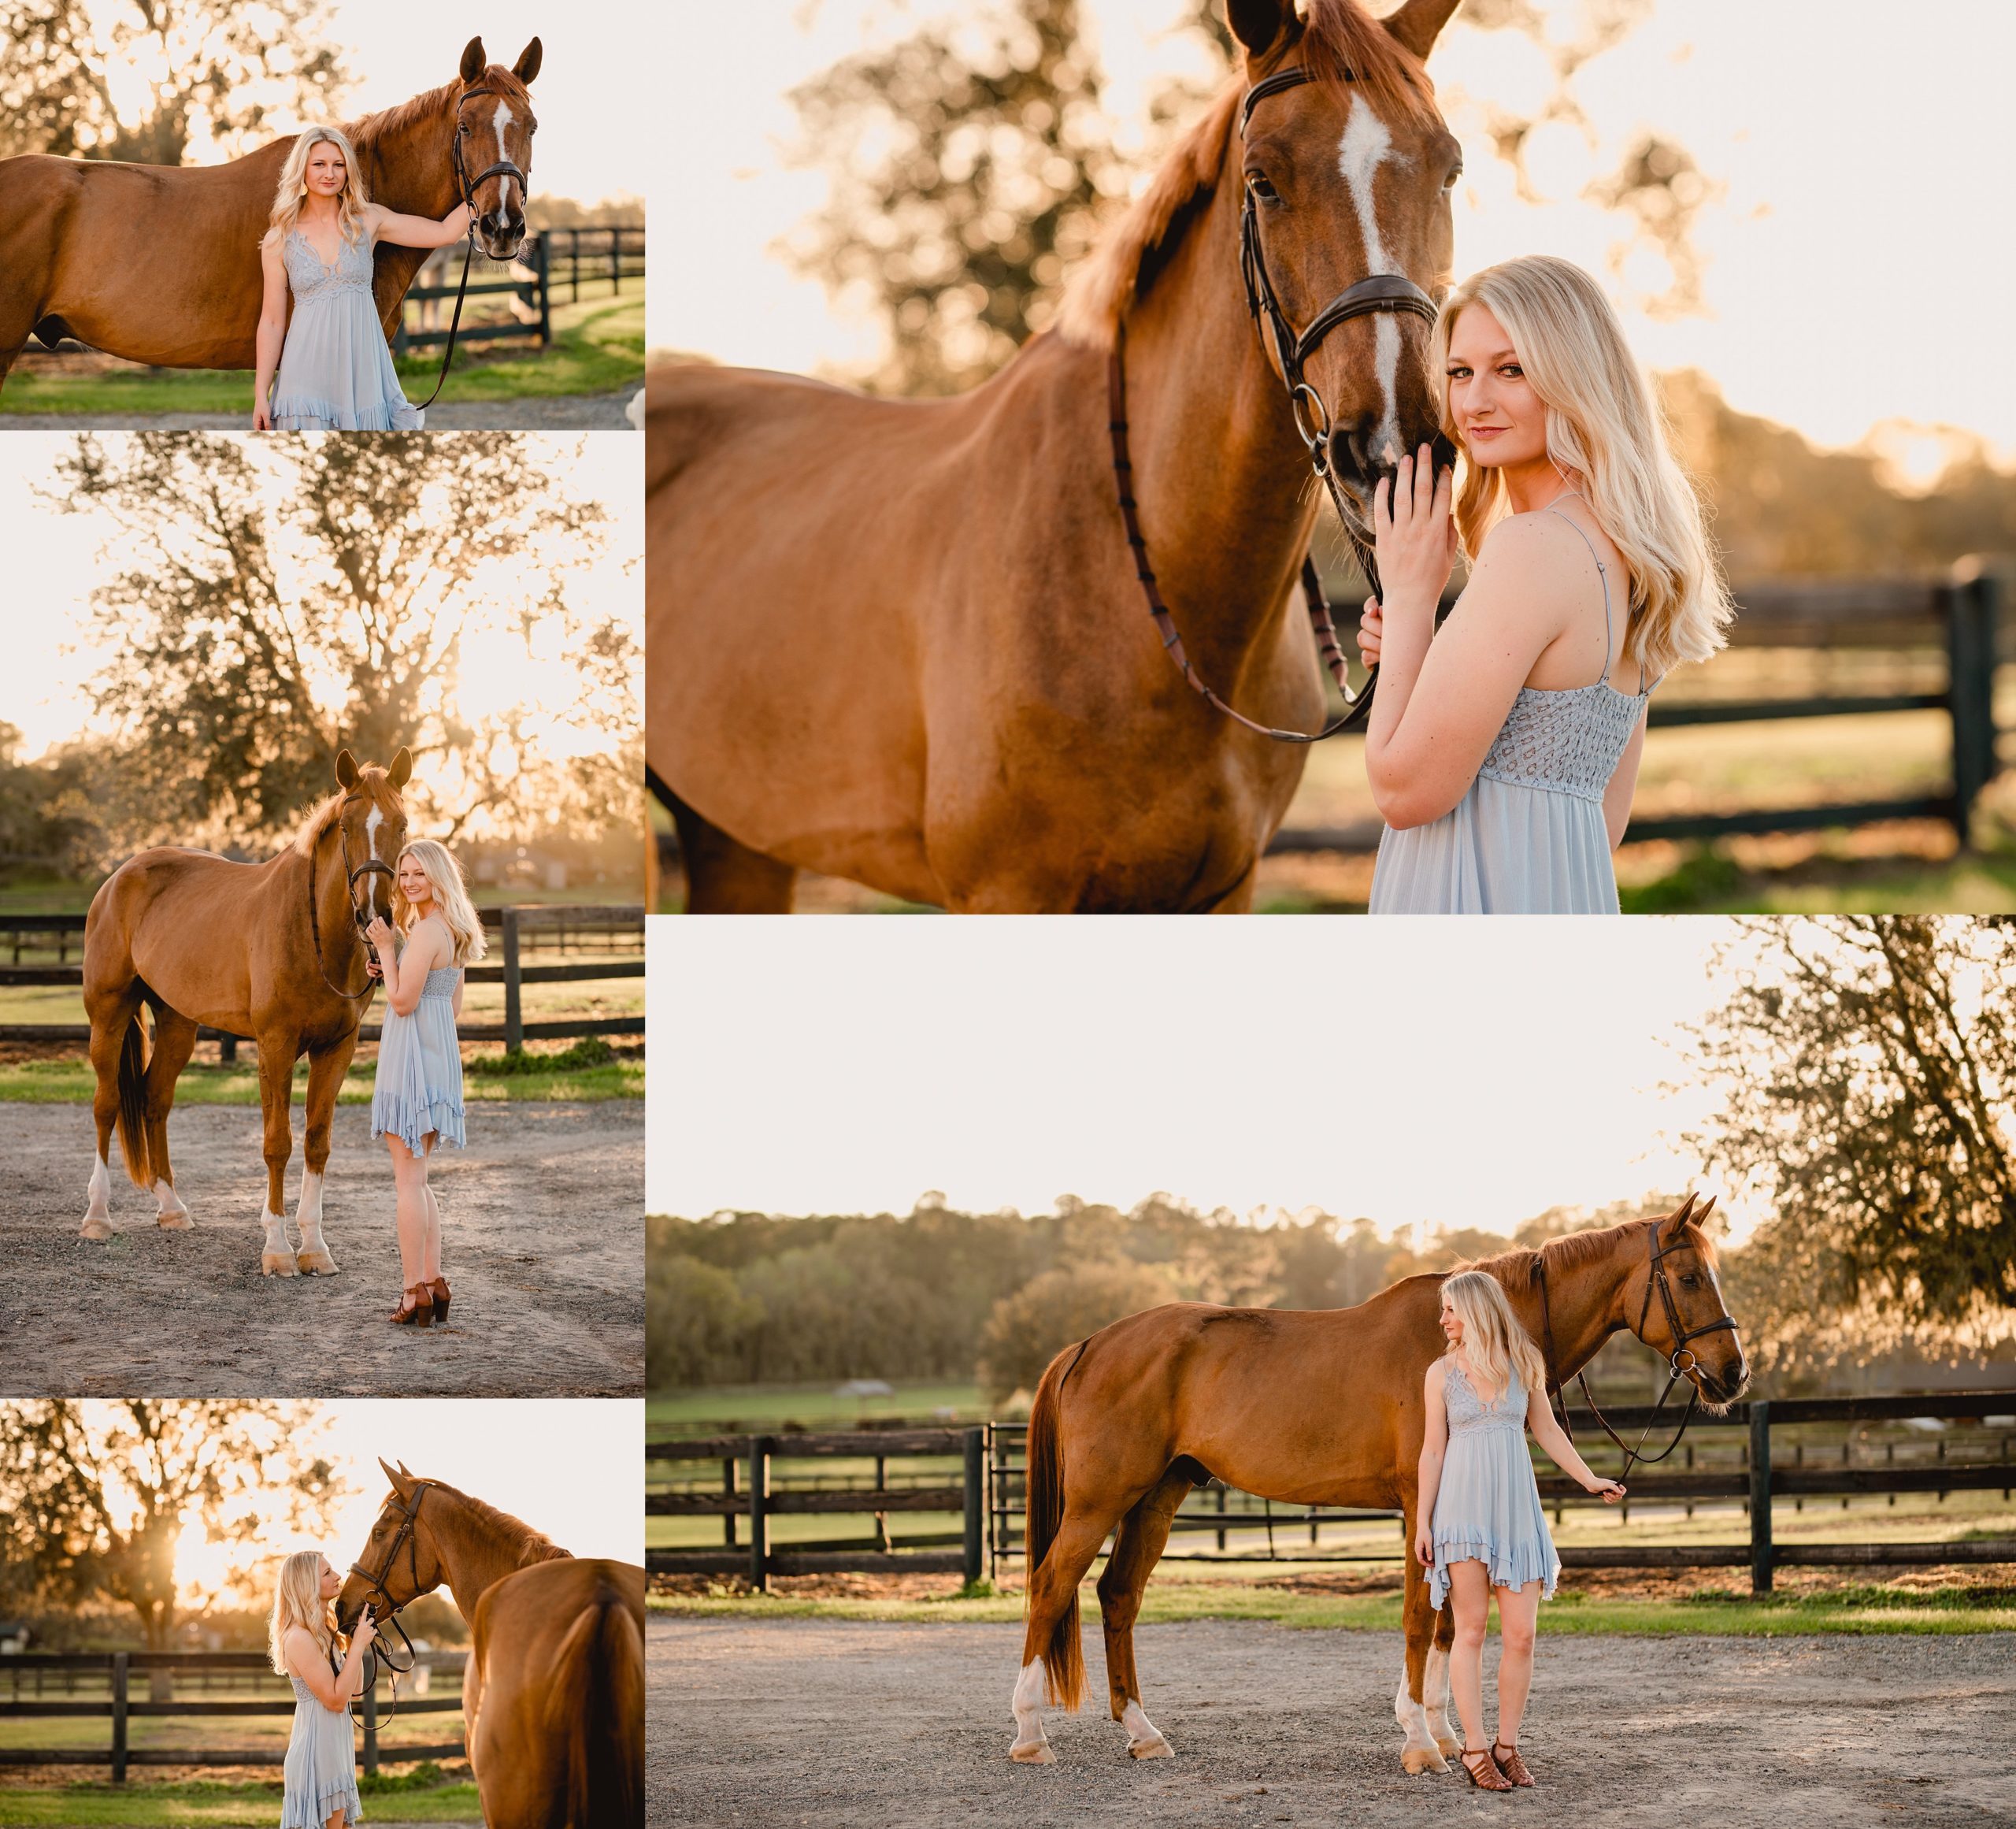 Pose ideas for girl with large warmblood horse. Ocala Fl sunset photographer